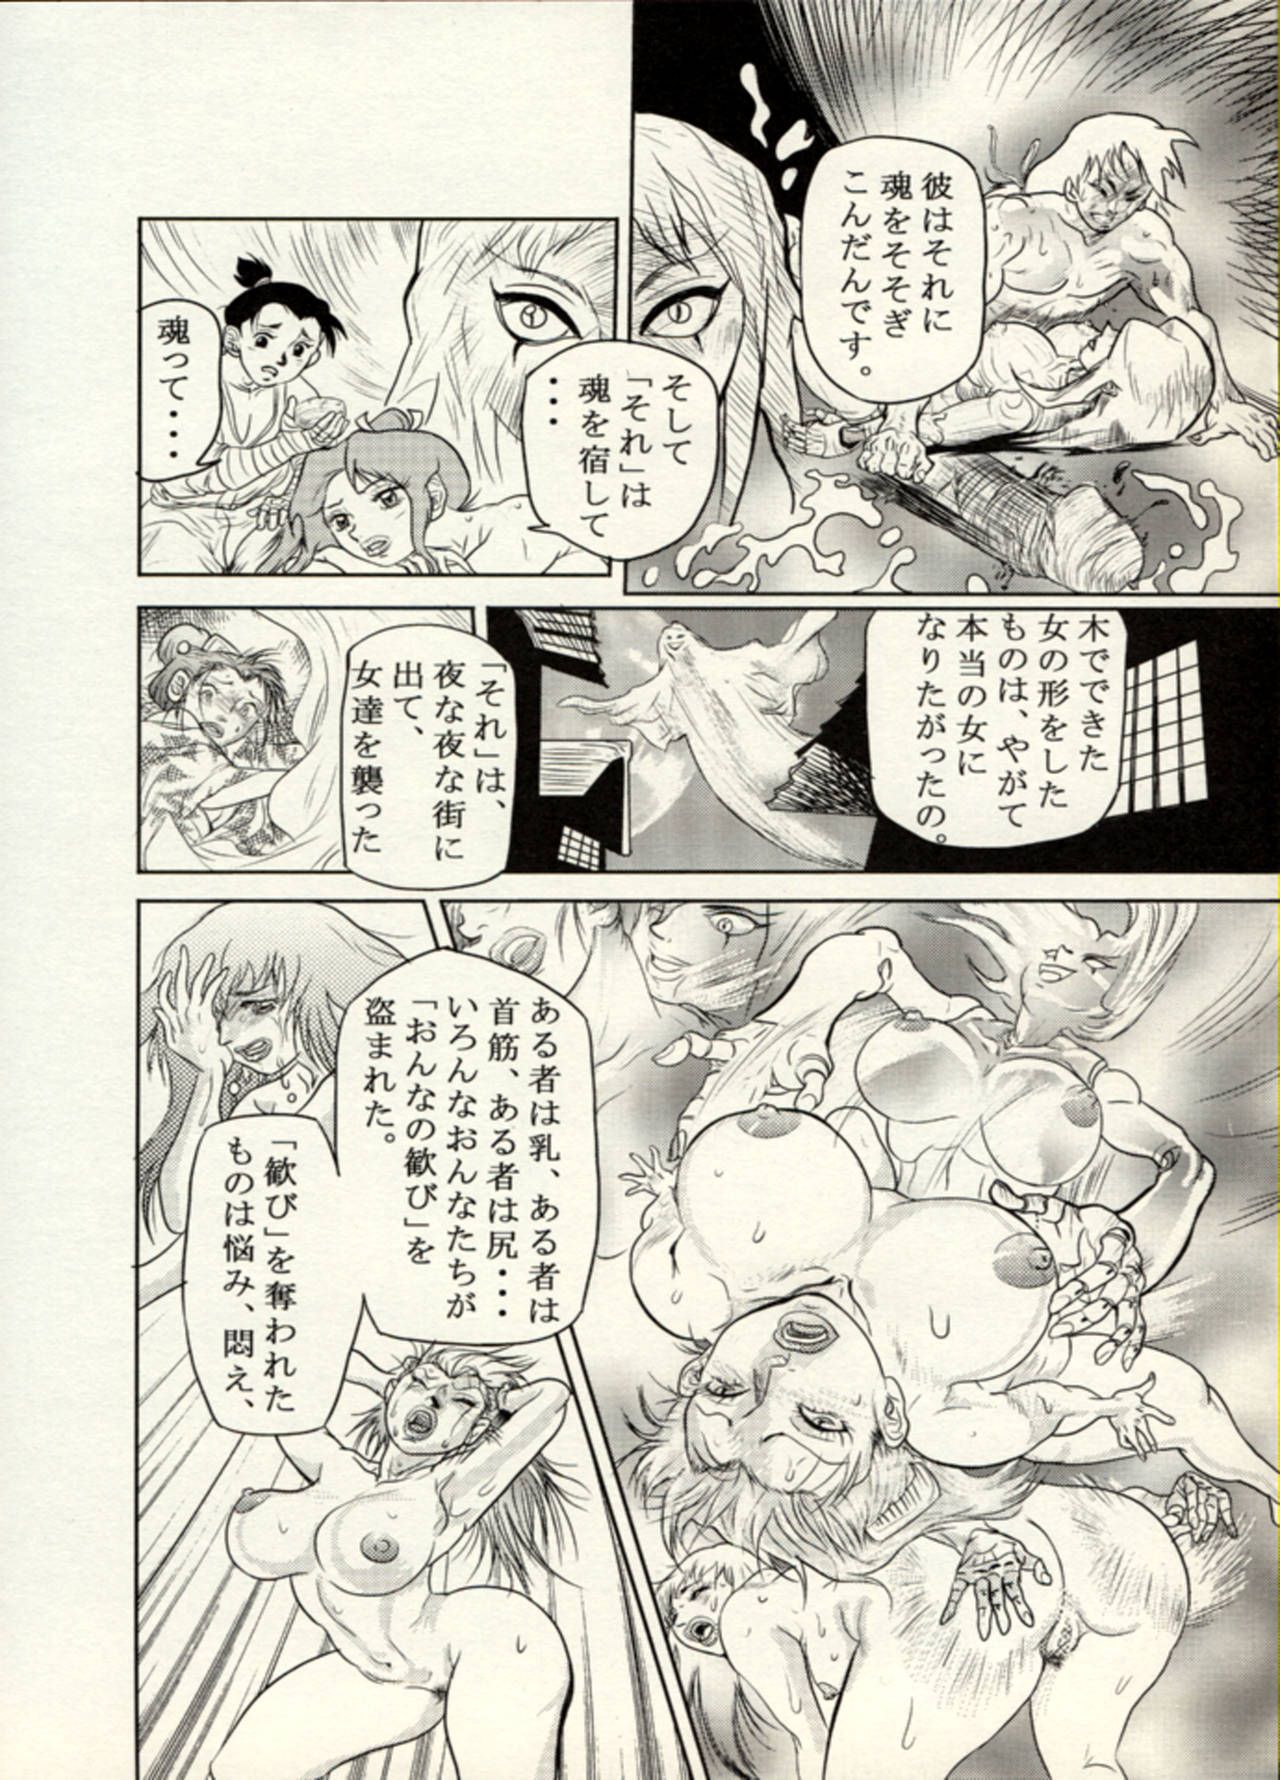 Manga Battle Volume 5 32